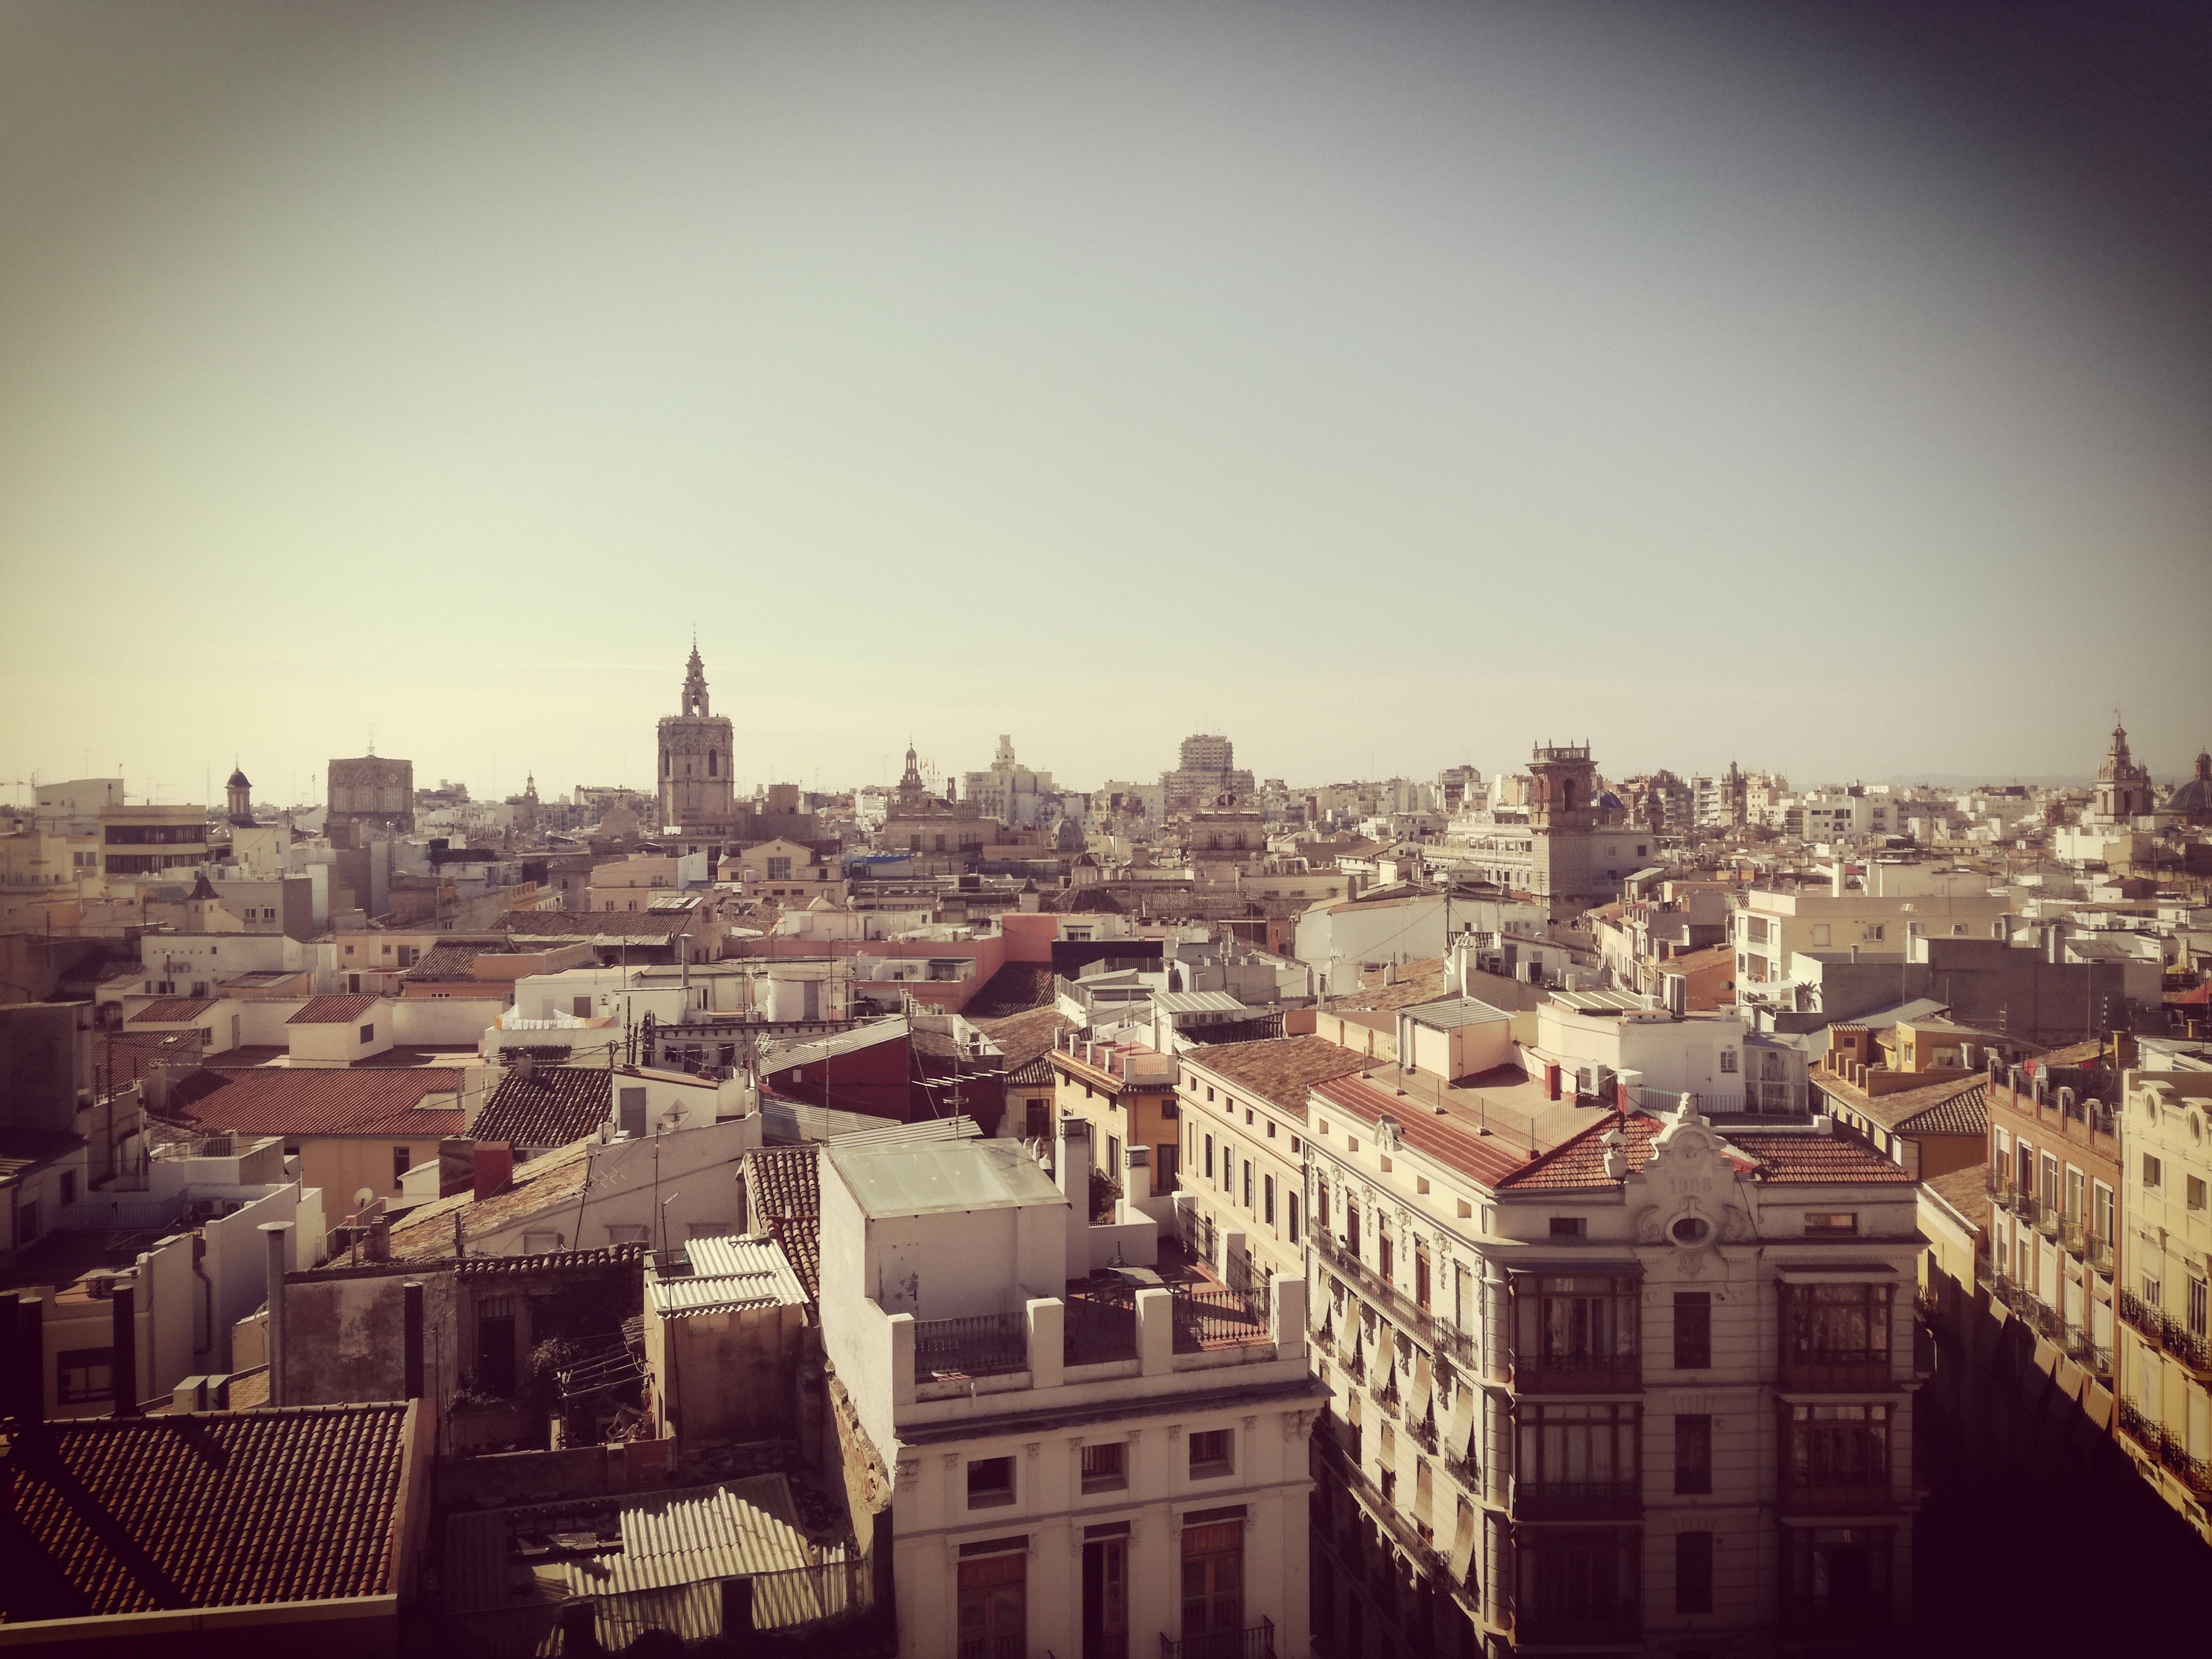 perspectiva.
#valencia #ciudad #inspiration #travel 